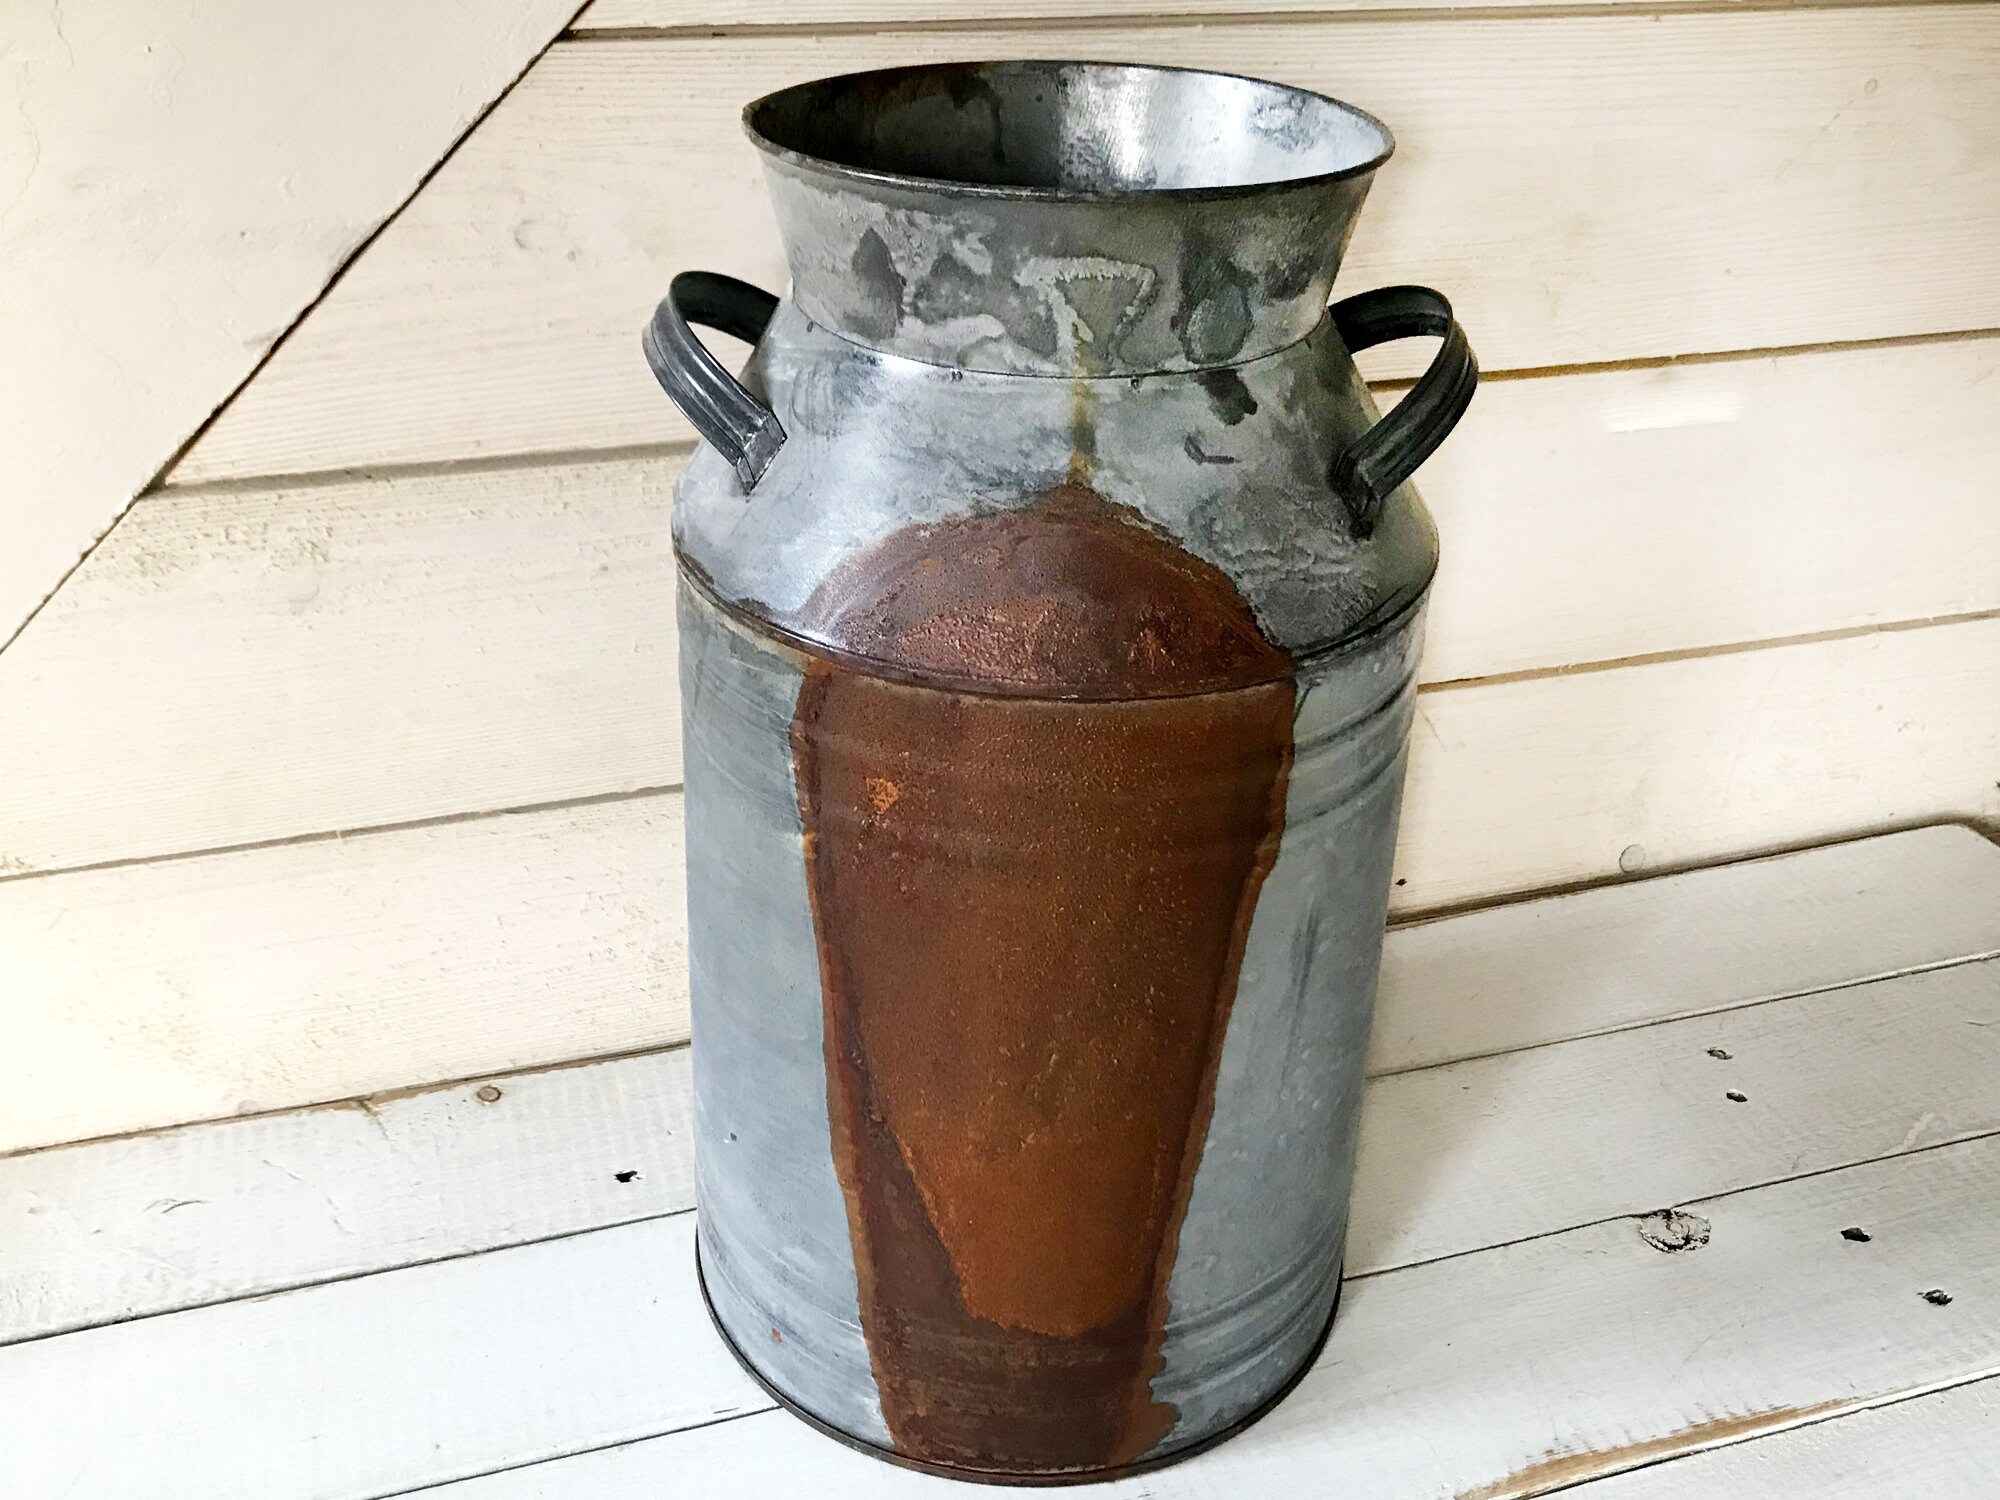 Copper and Galvanized Metal Rustic Farmhouse Pitcher Vase